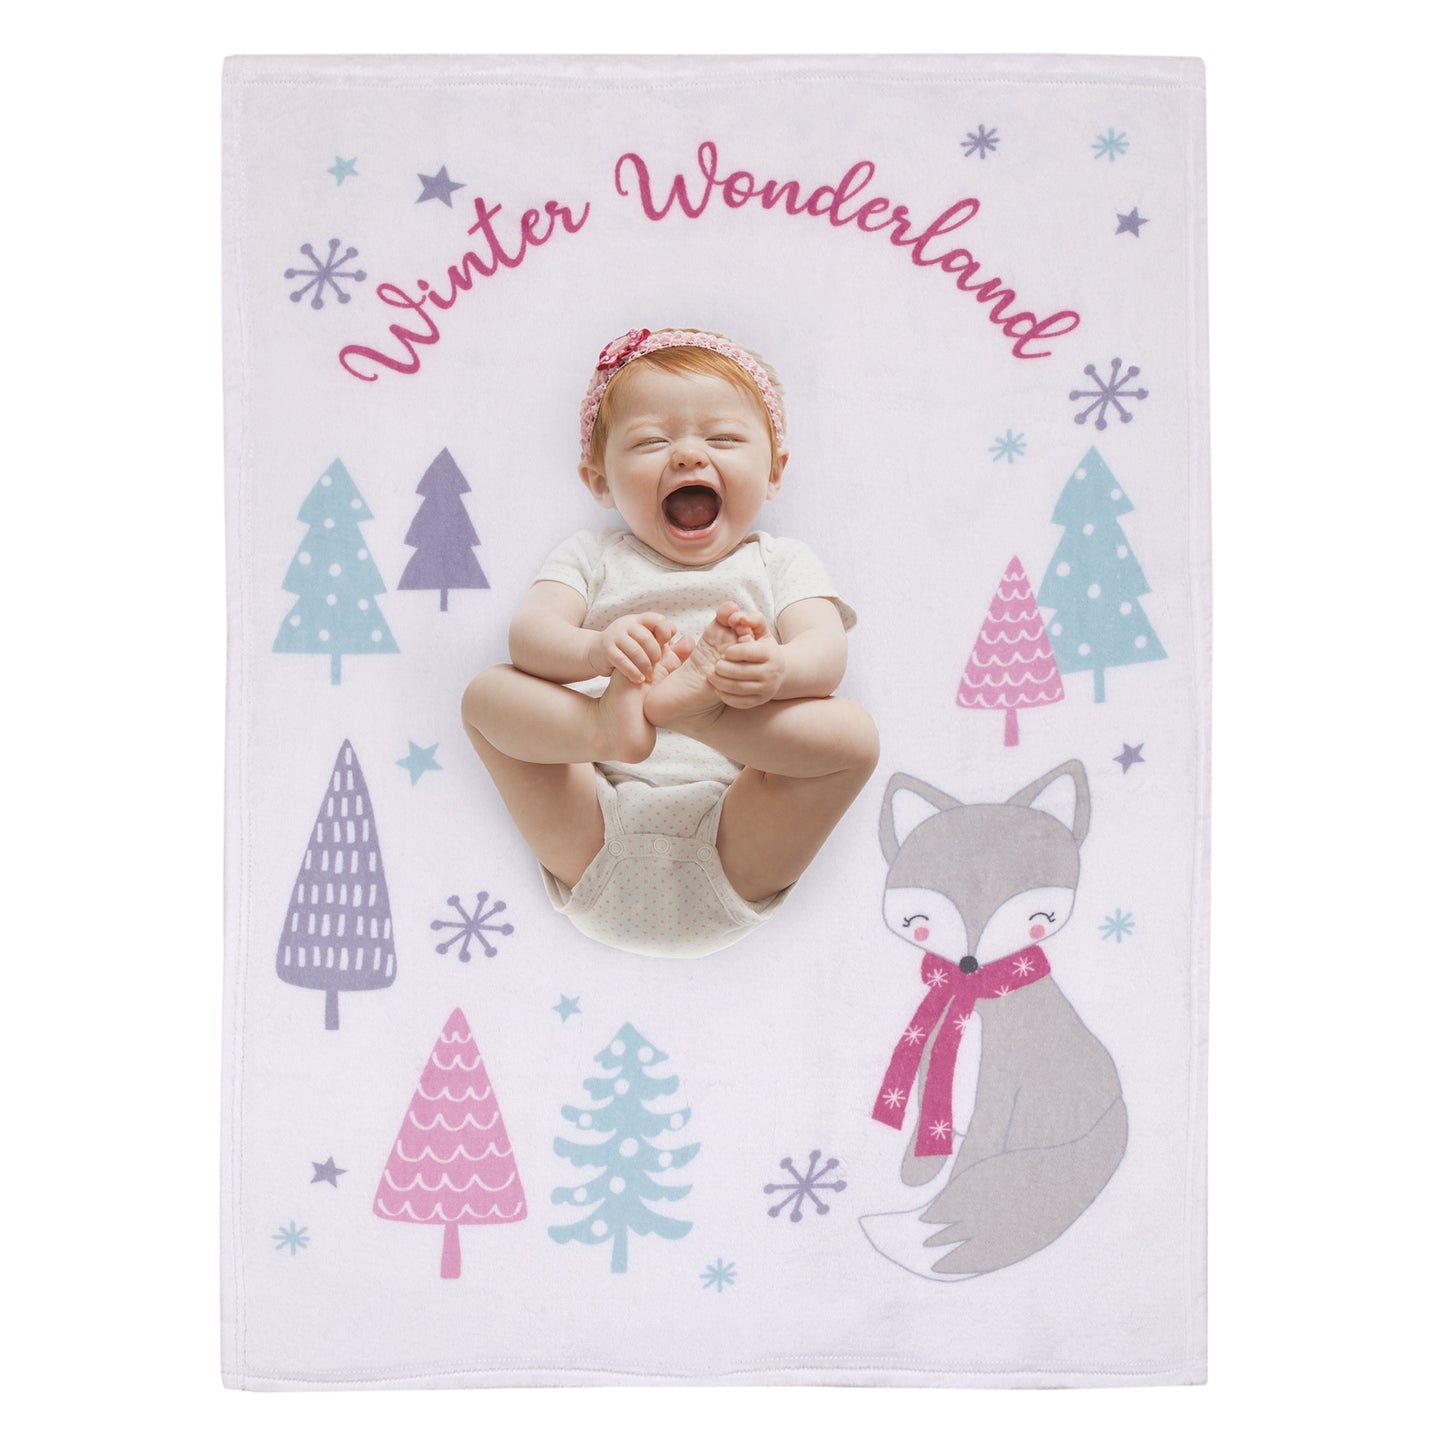 NoJo Fox White, Gray, and Purple "Winter Wonderland" Christmas Photo Op Super Soft Baby Blanket